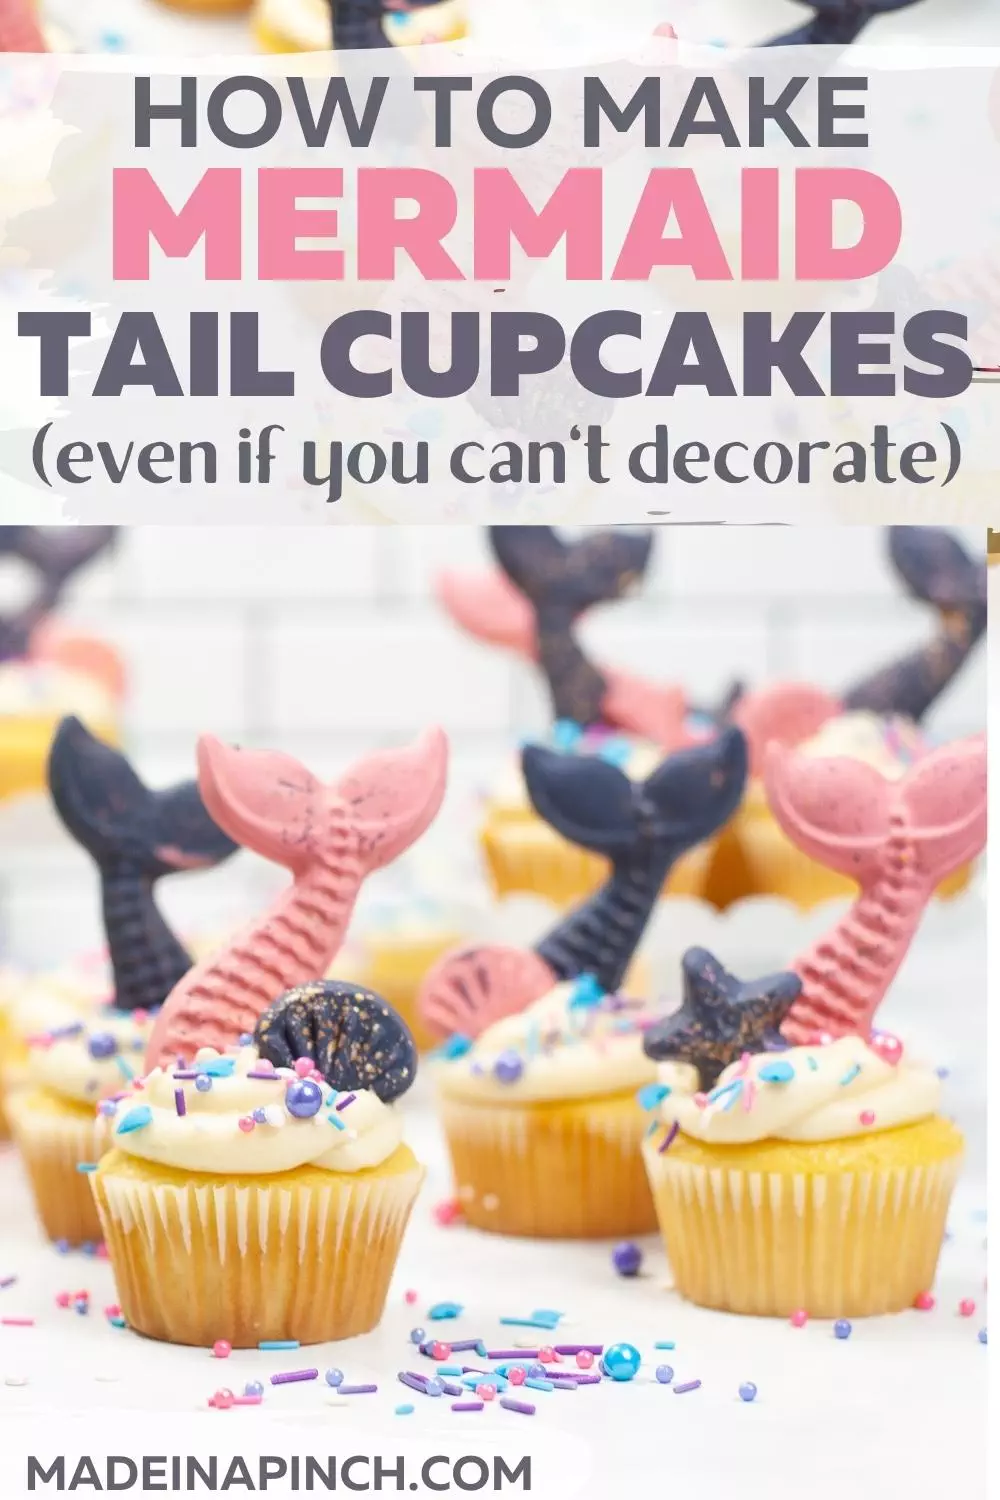 How to make mermaid tail cupcakes pin image